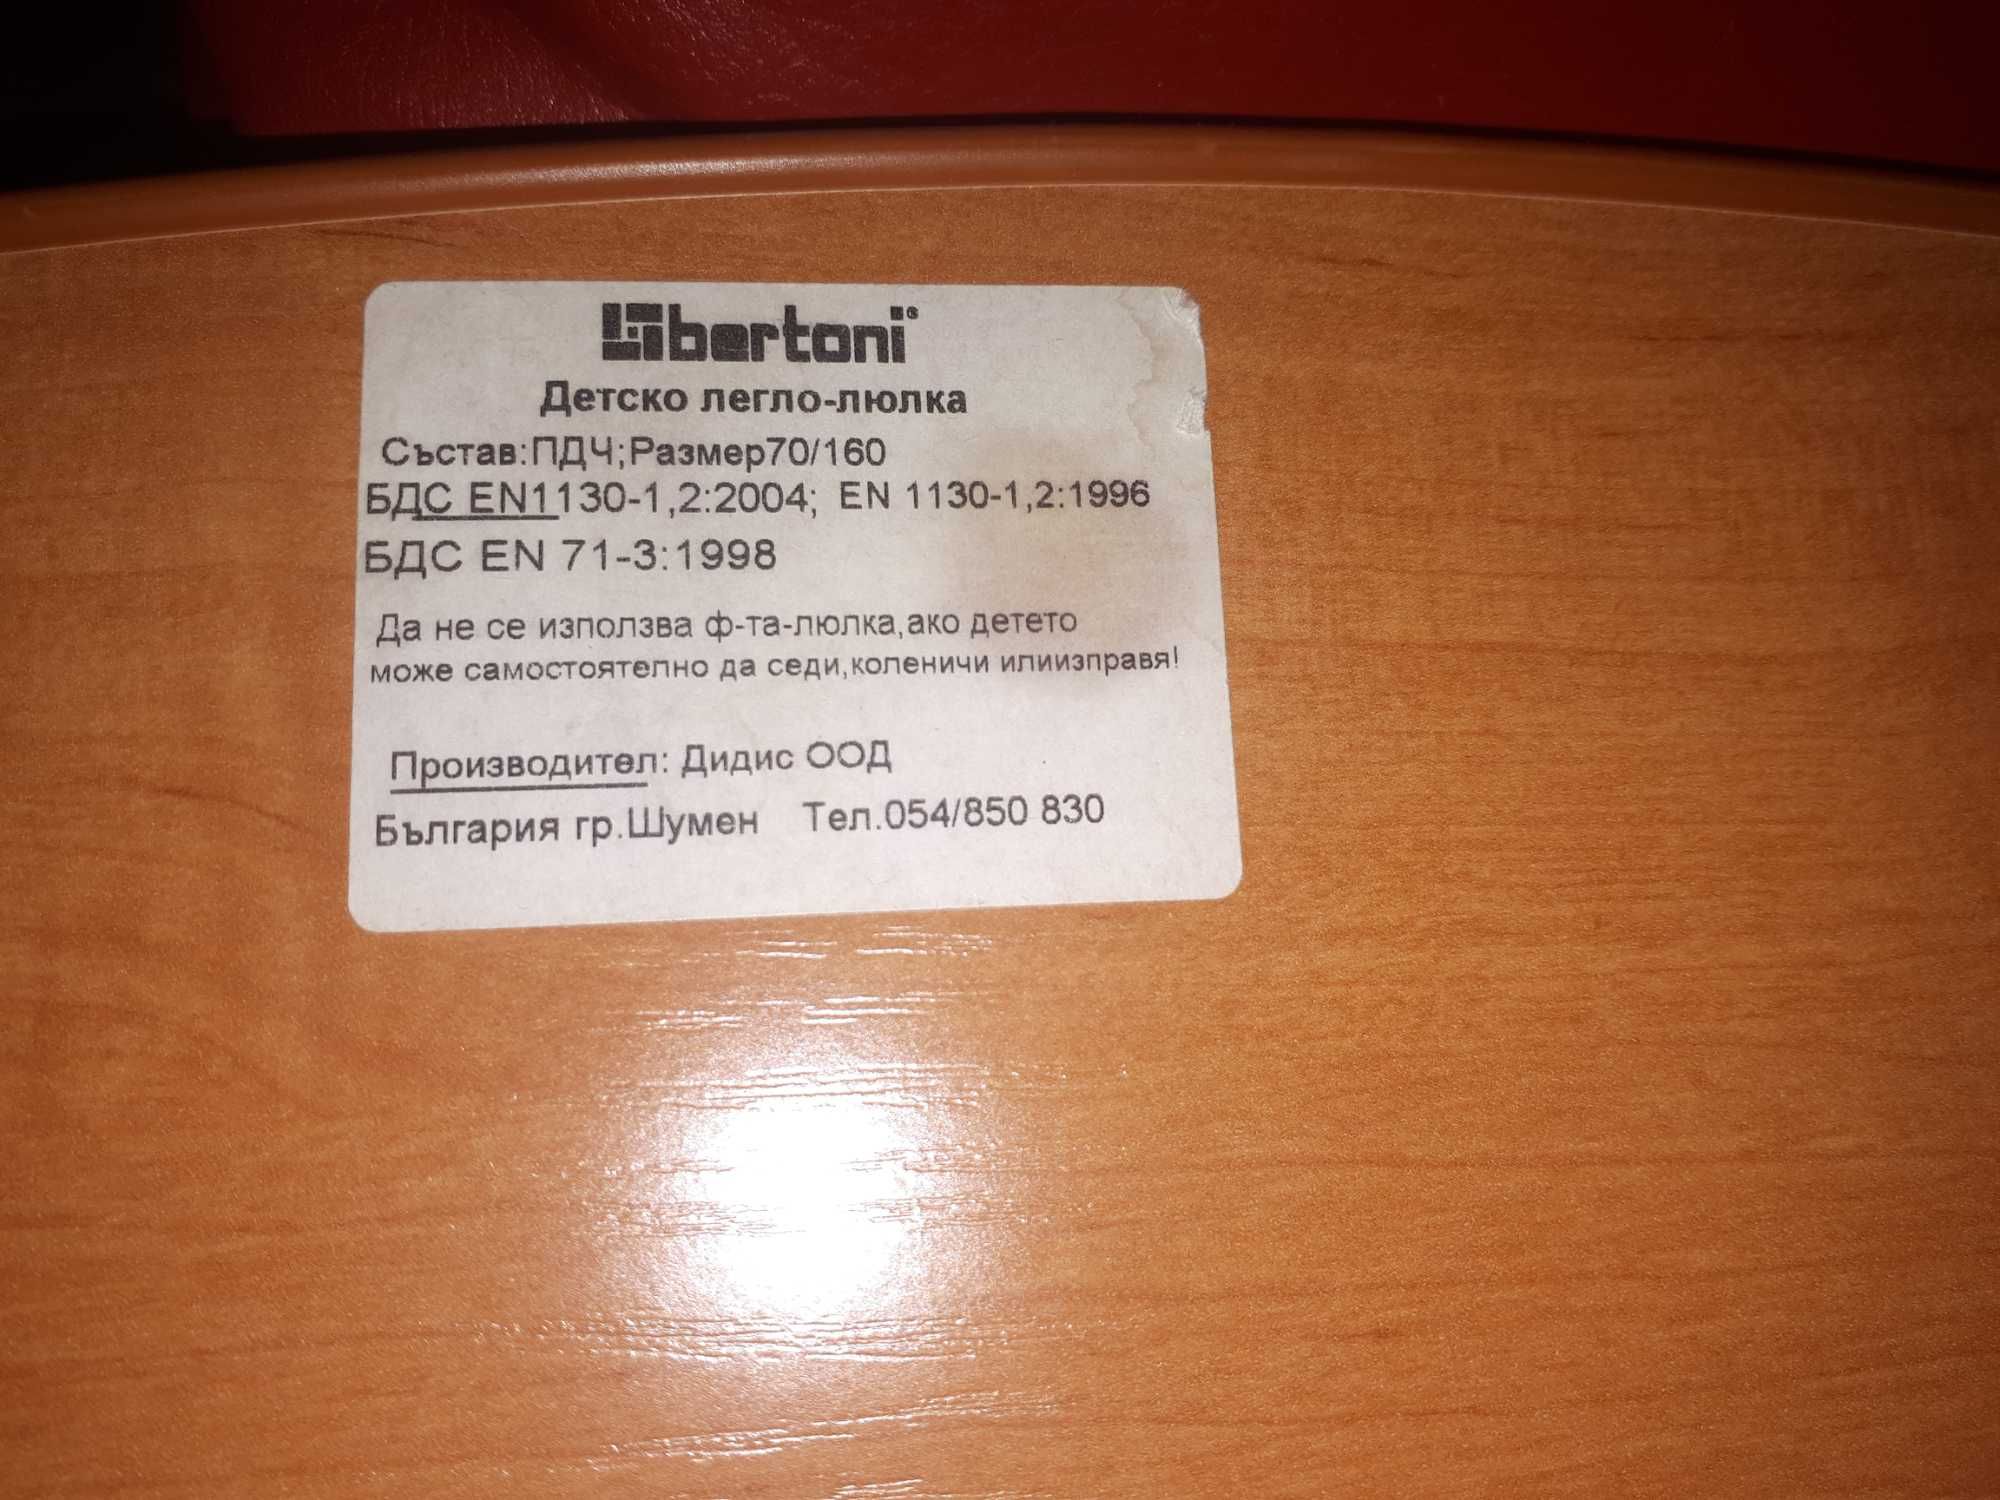 Детско трансхормиращо се в юношеско легло Bertoni - използвано